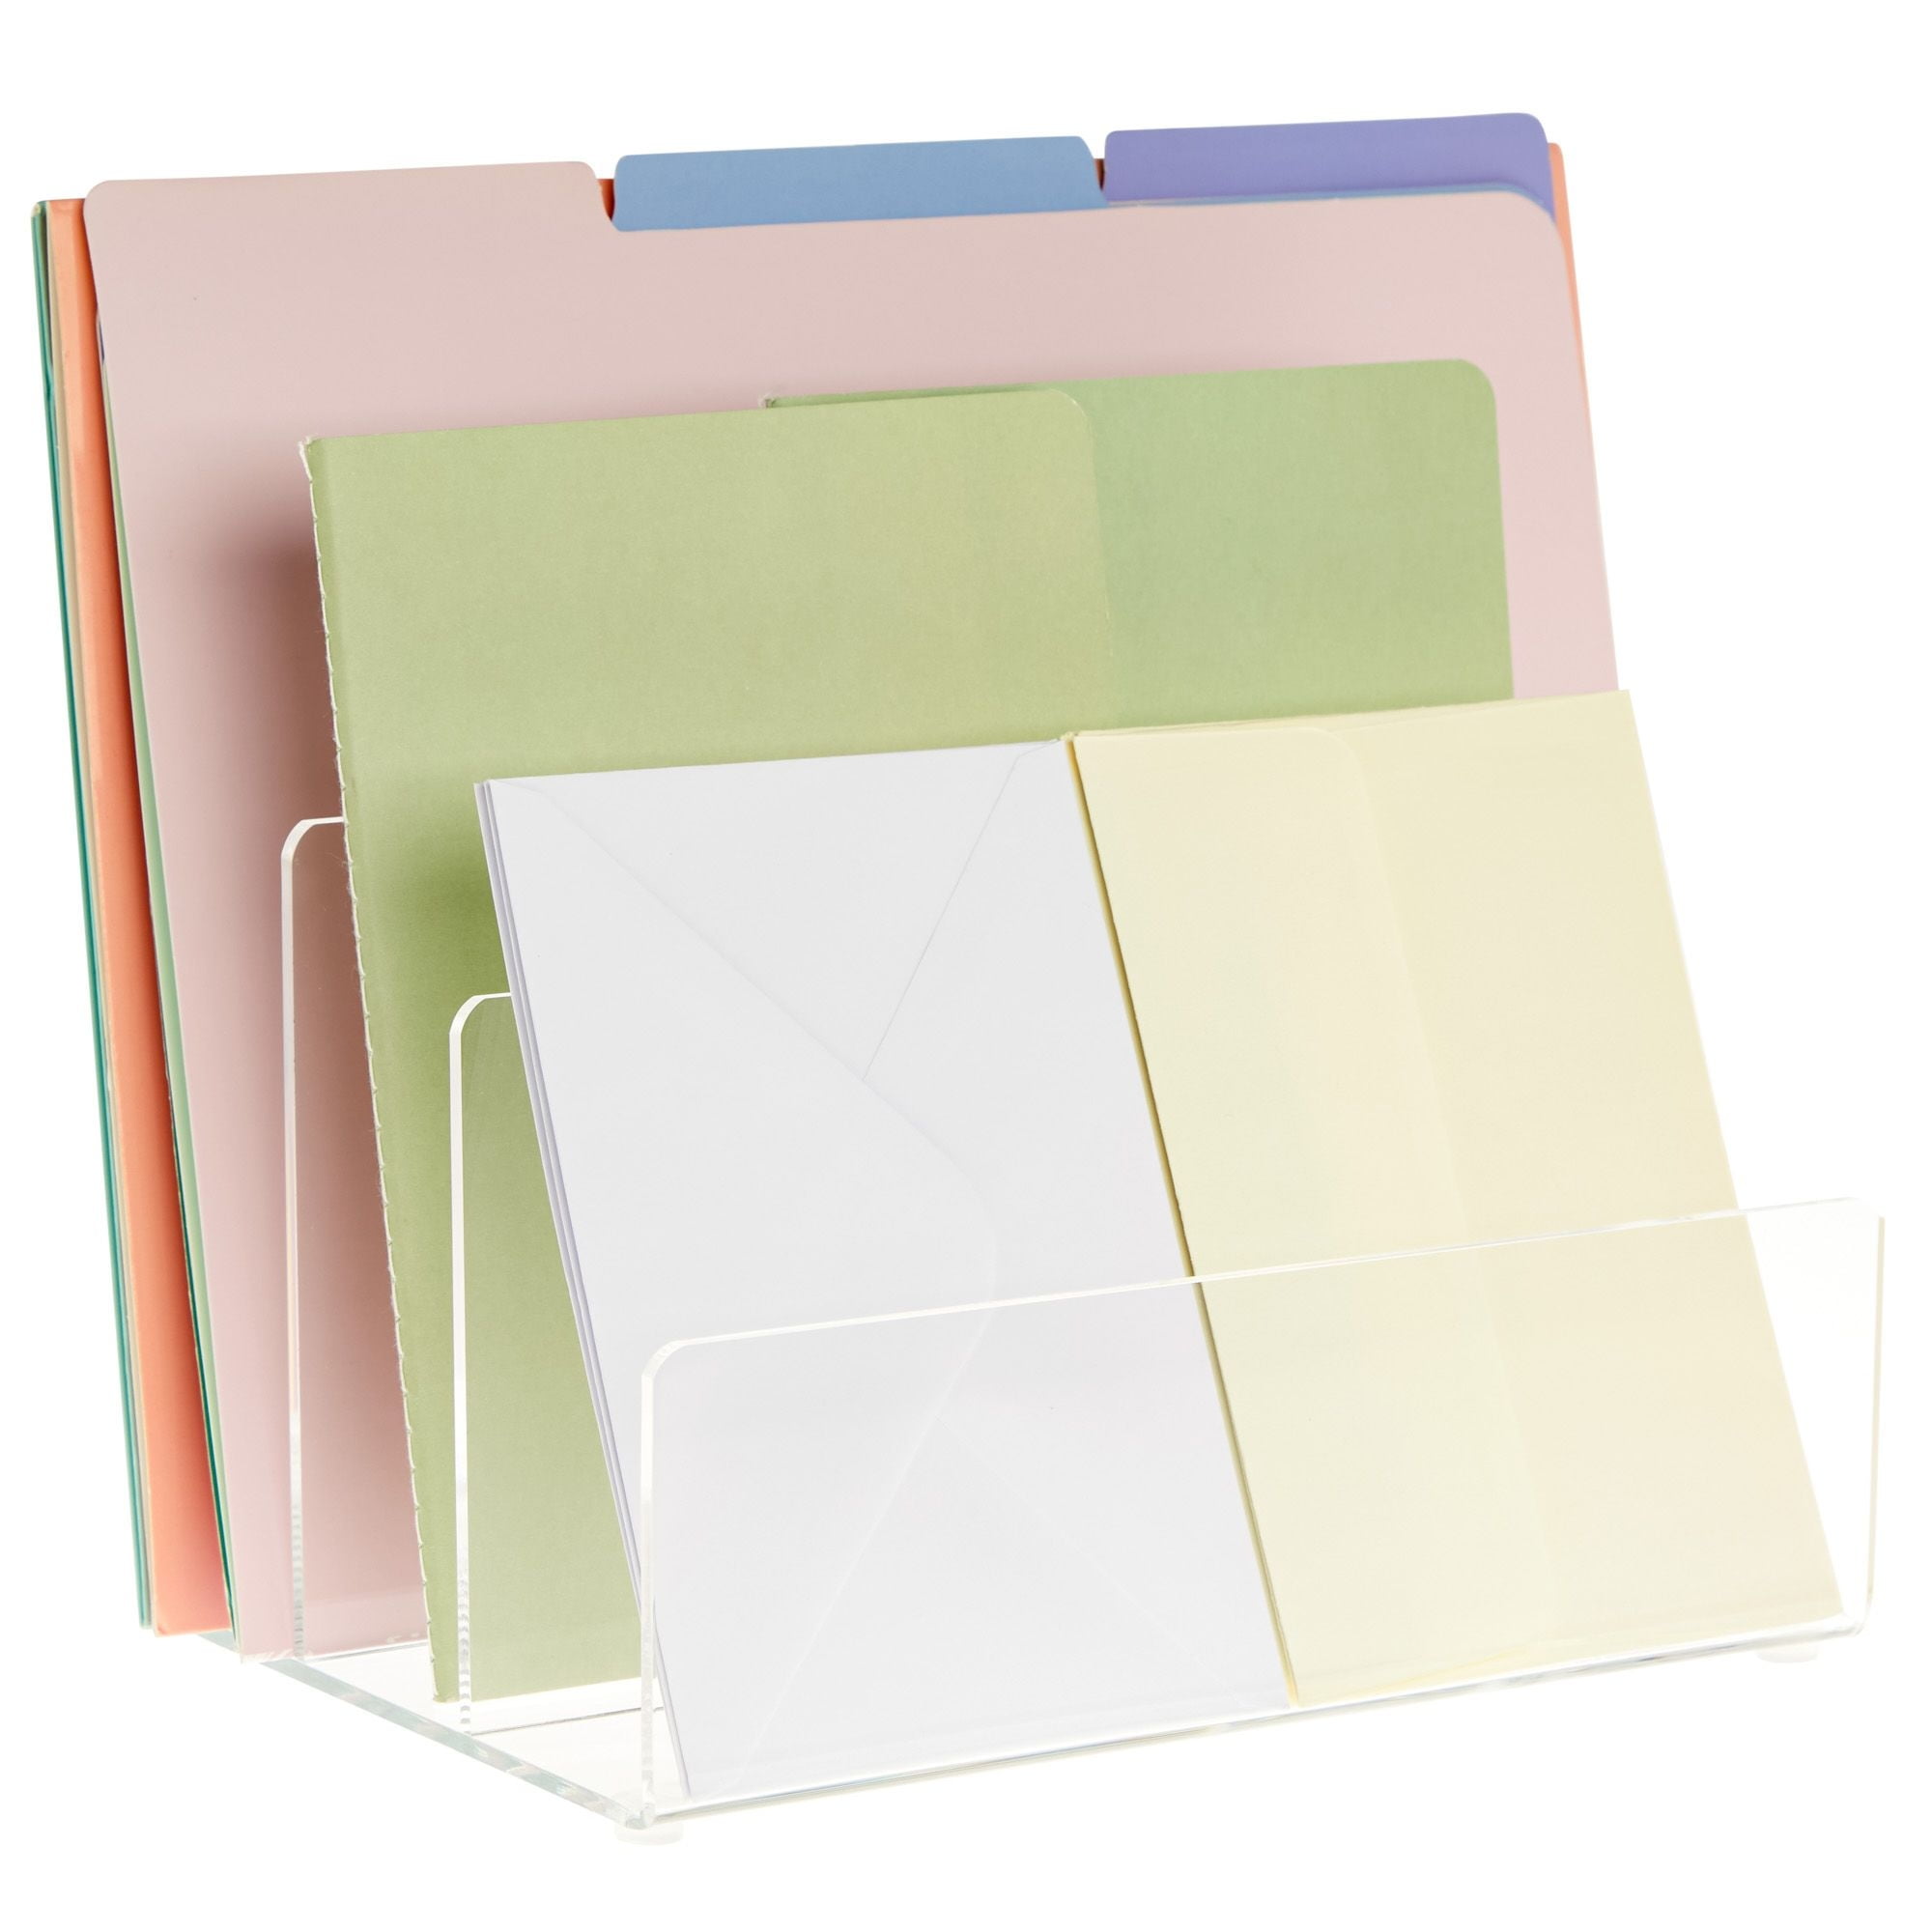  Oterri 3 PCS Clear Paper Storage Box, Plastic File